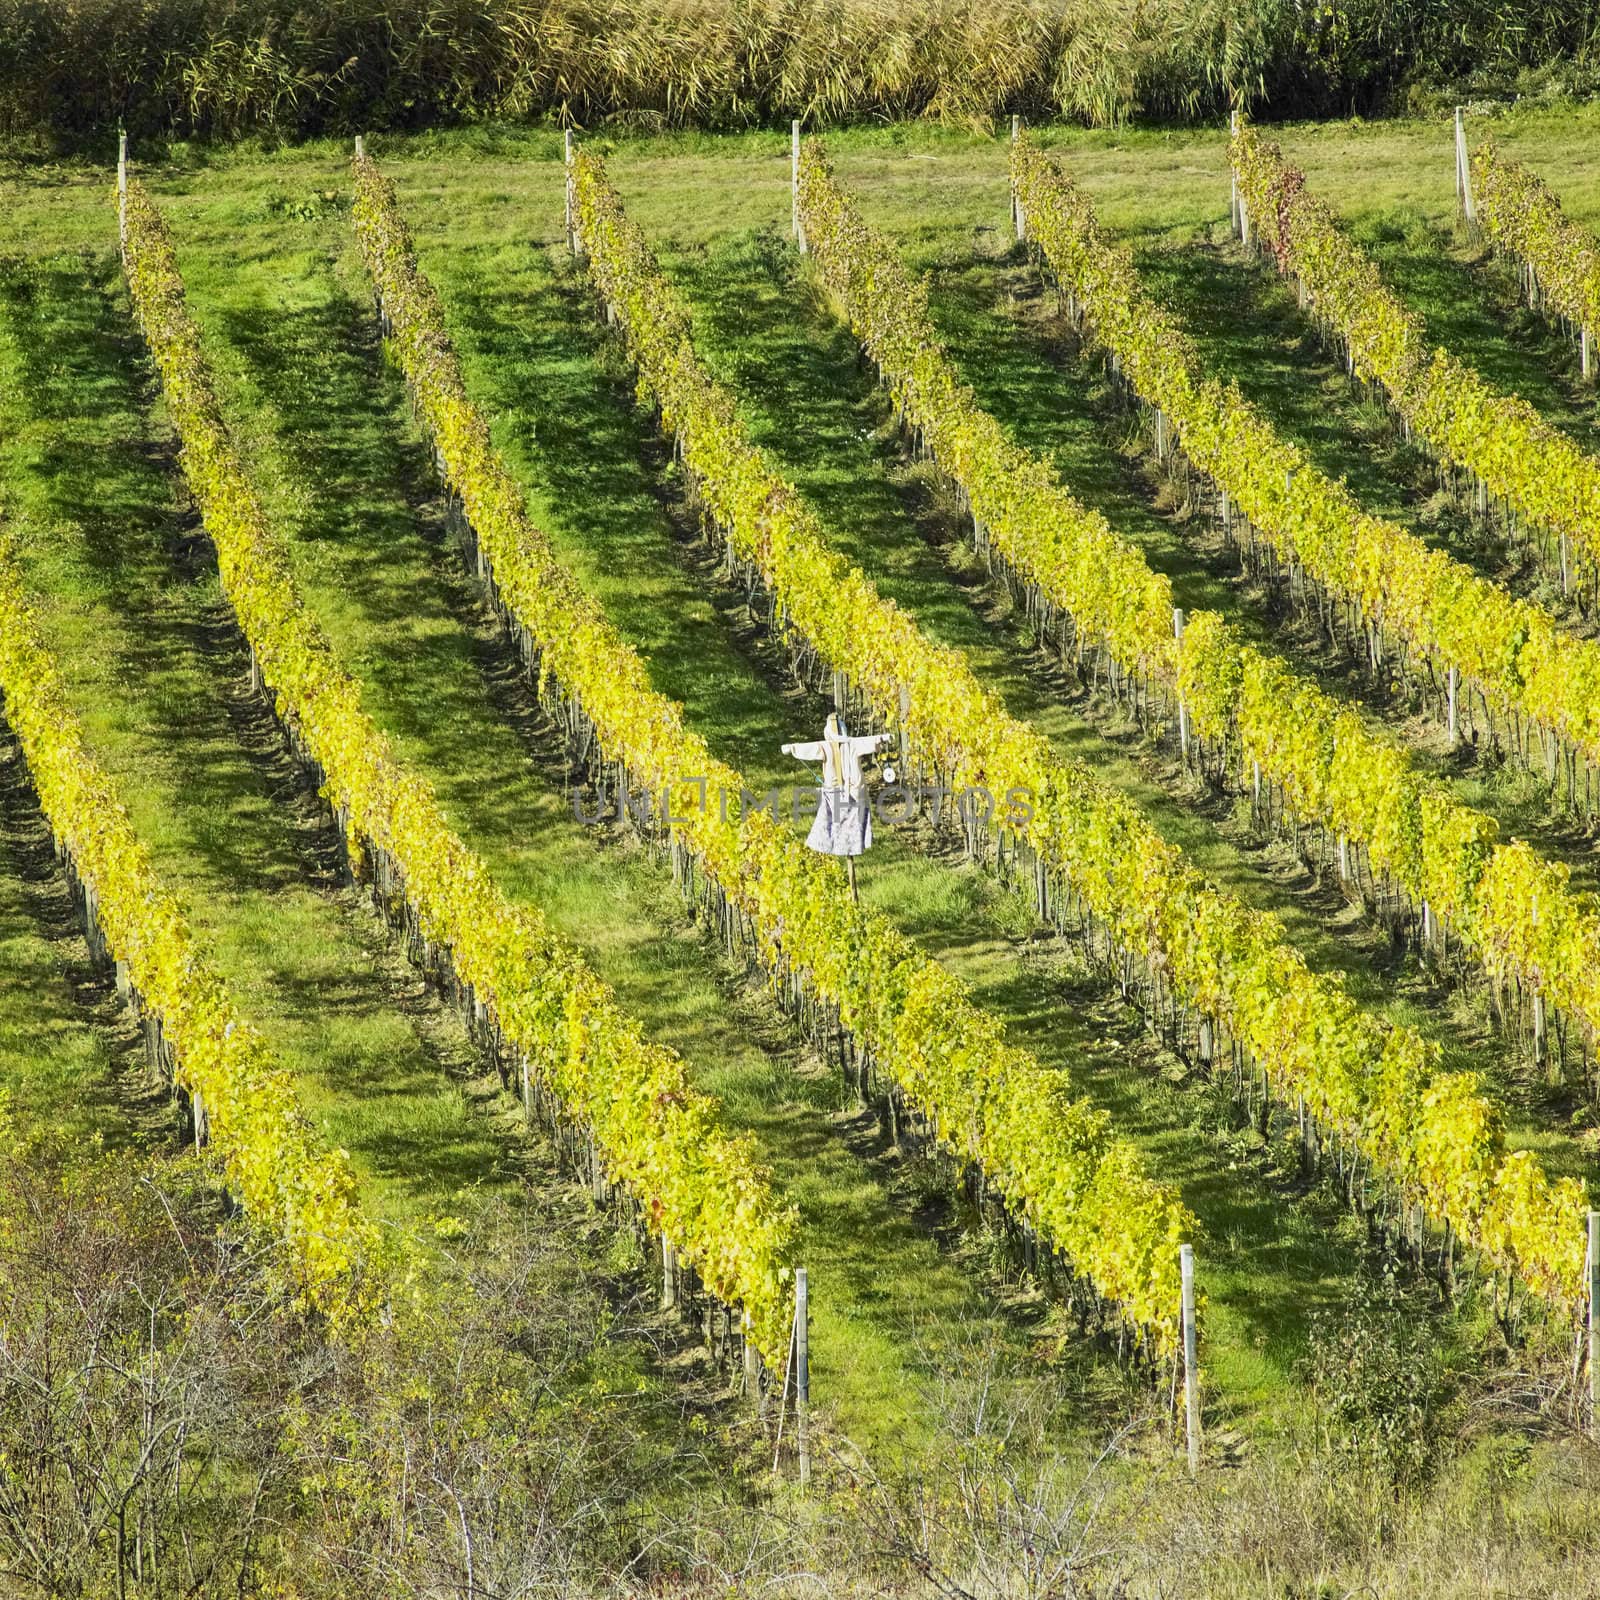 vineyards in Velke Bilovice region, Czech Republic by phbcz